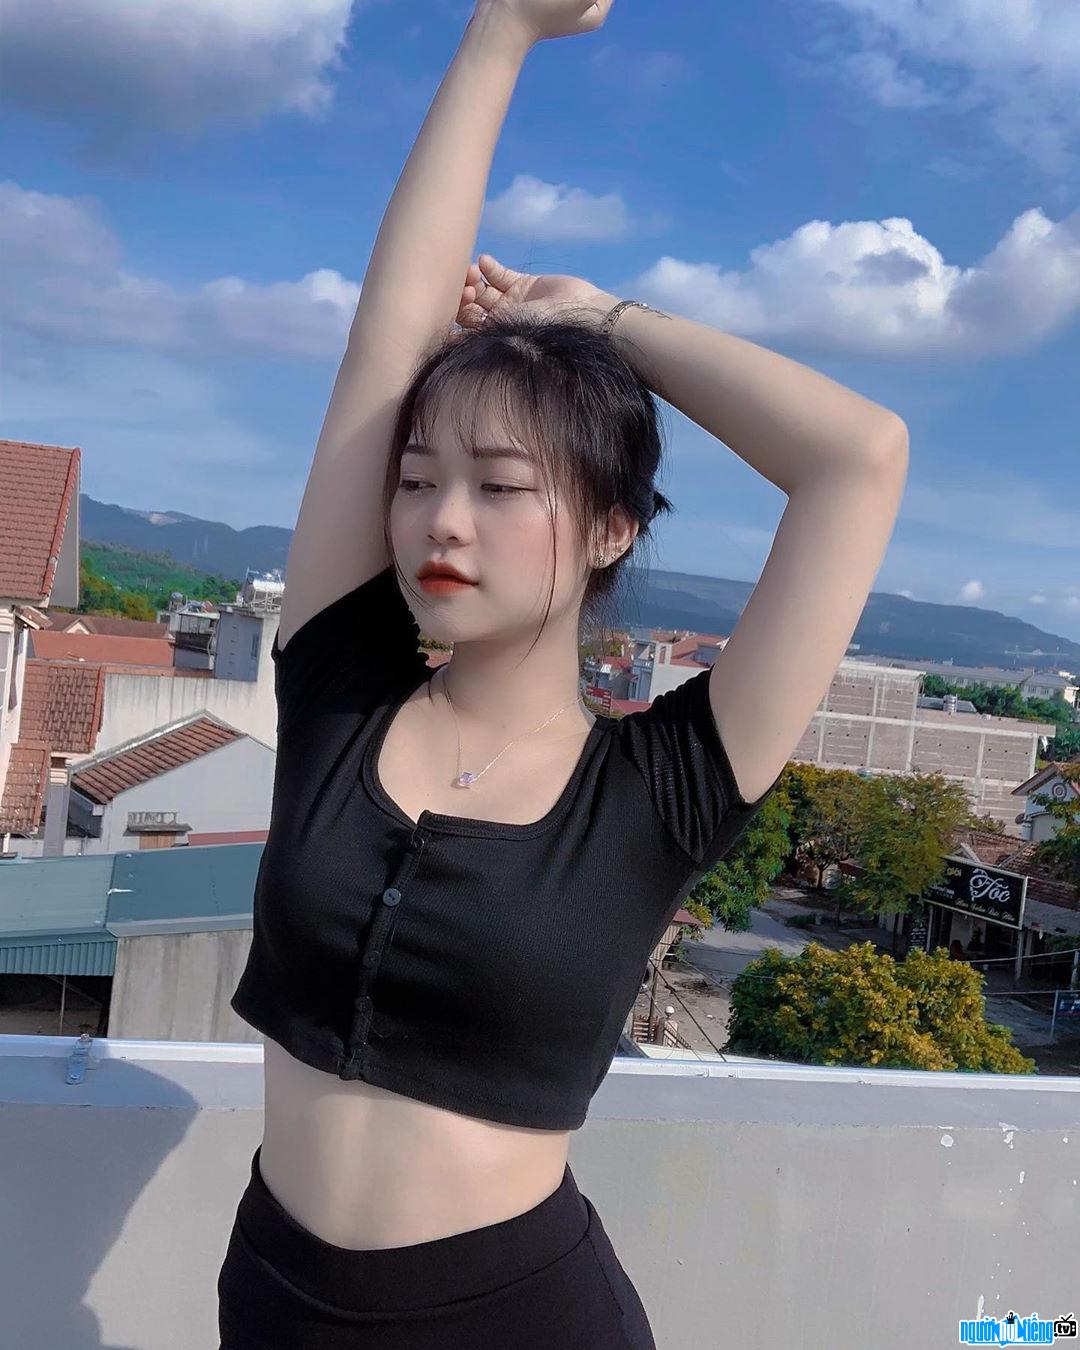  beautiful Dang Huyen with perfect body curves